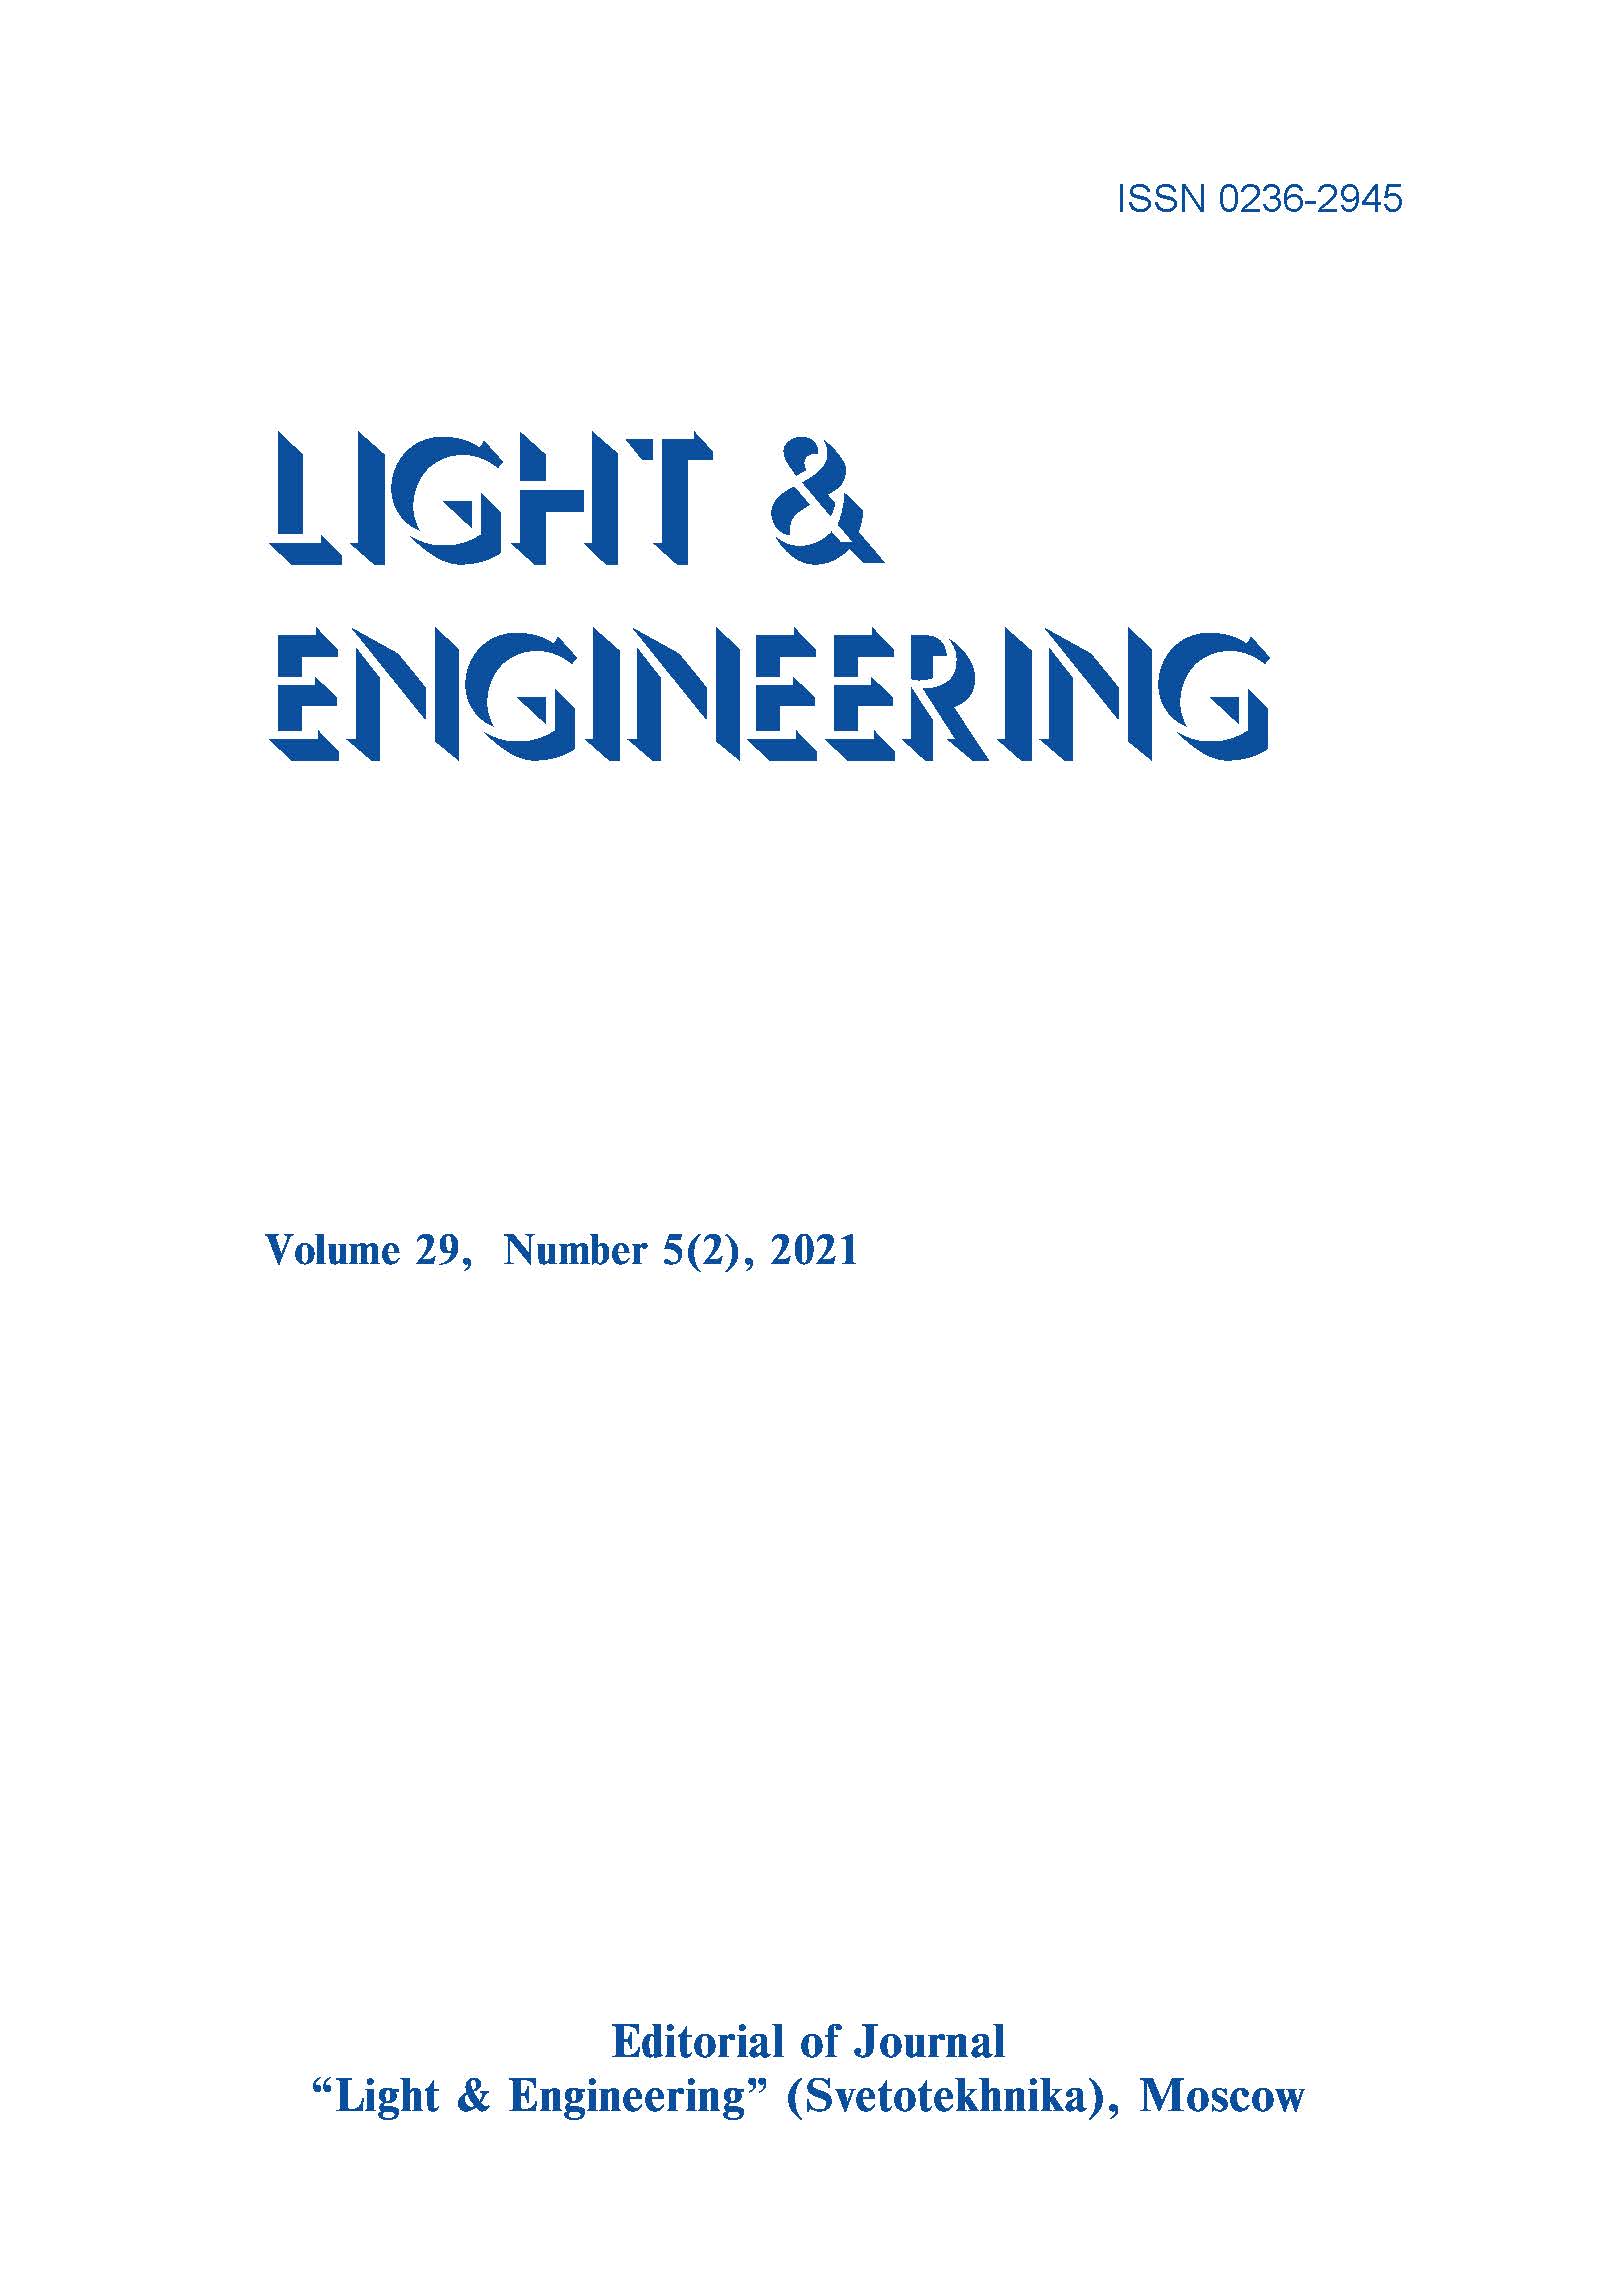 Development of Machine Learning Models for Predicting Daylight Glare Probability L&E, Vol. 29, No. 5 (2), 2021